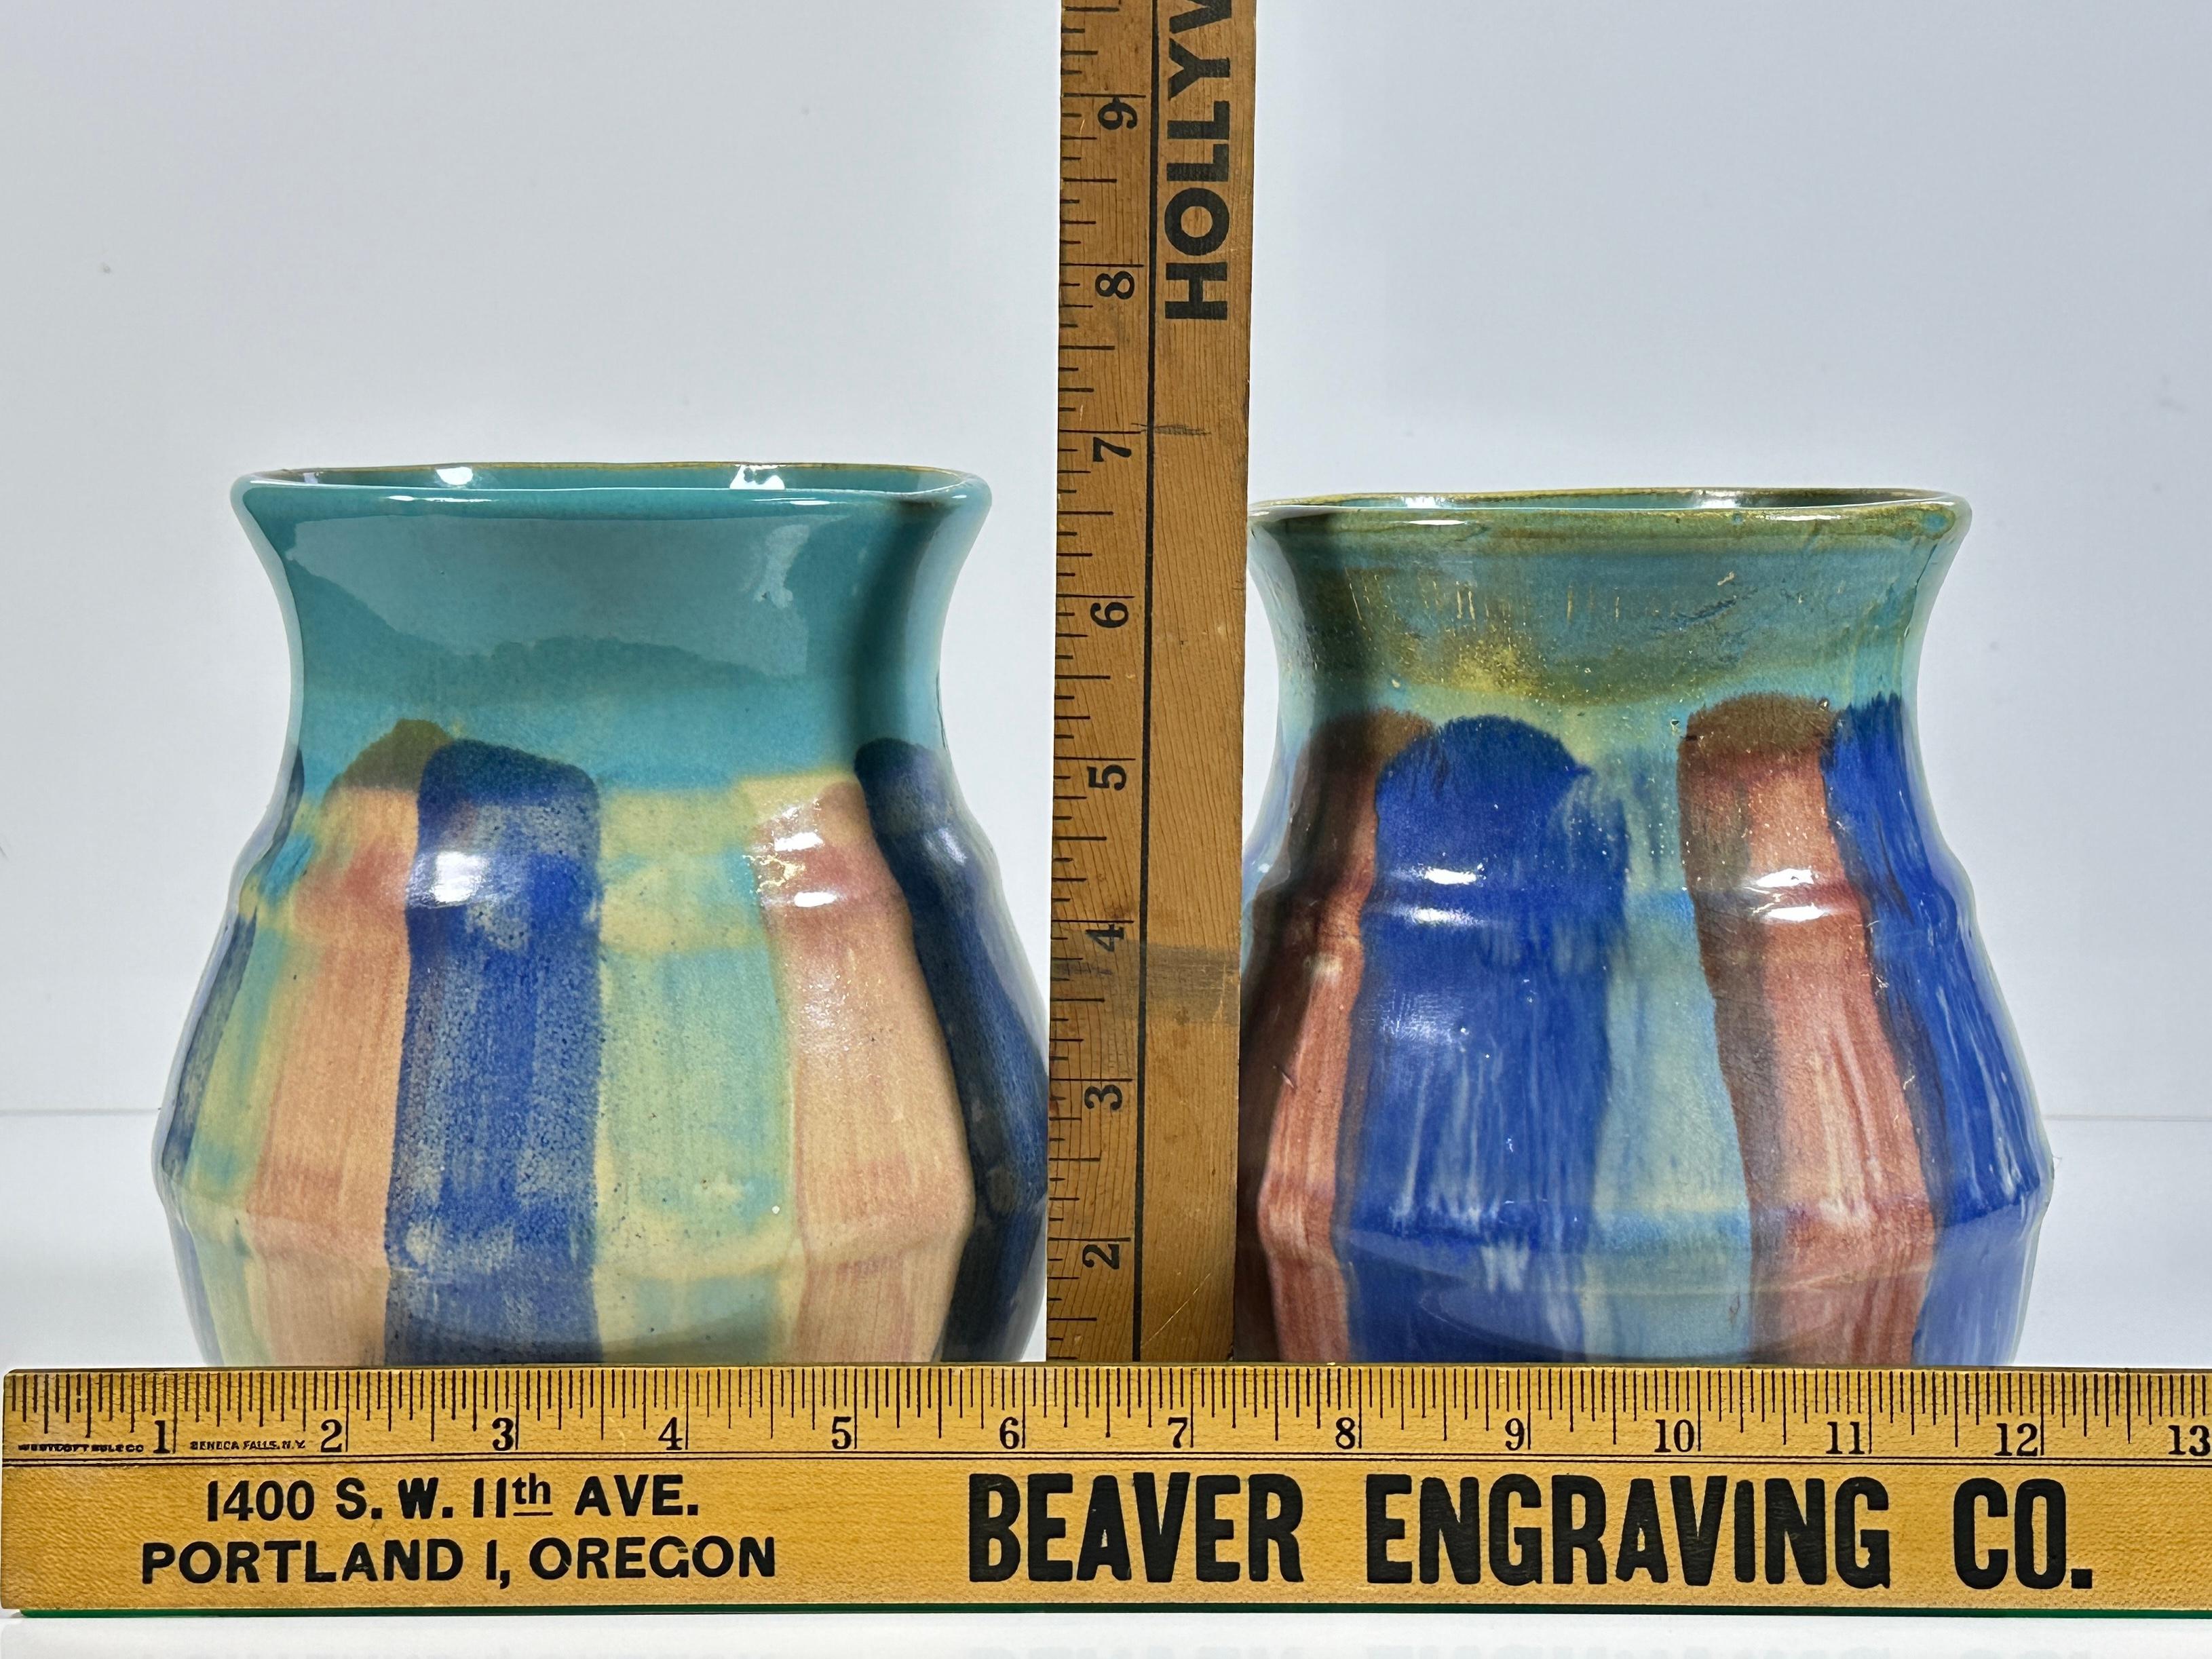 Pair of Hull Vases